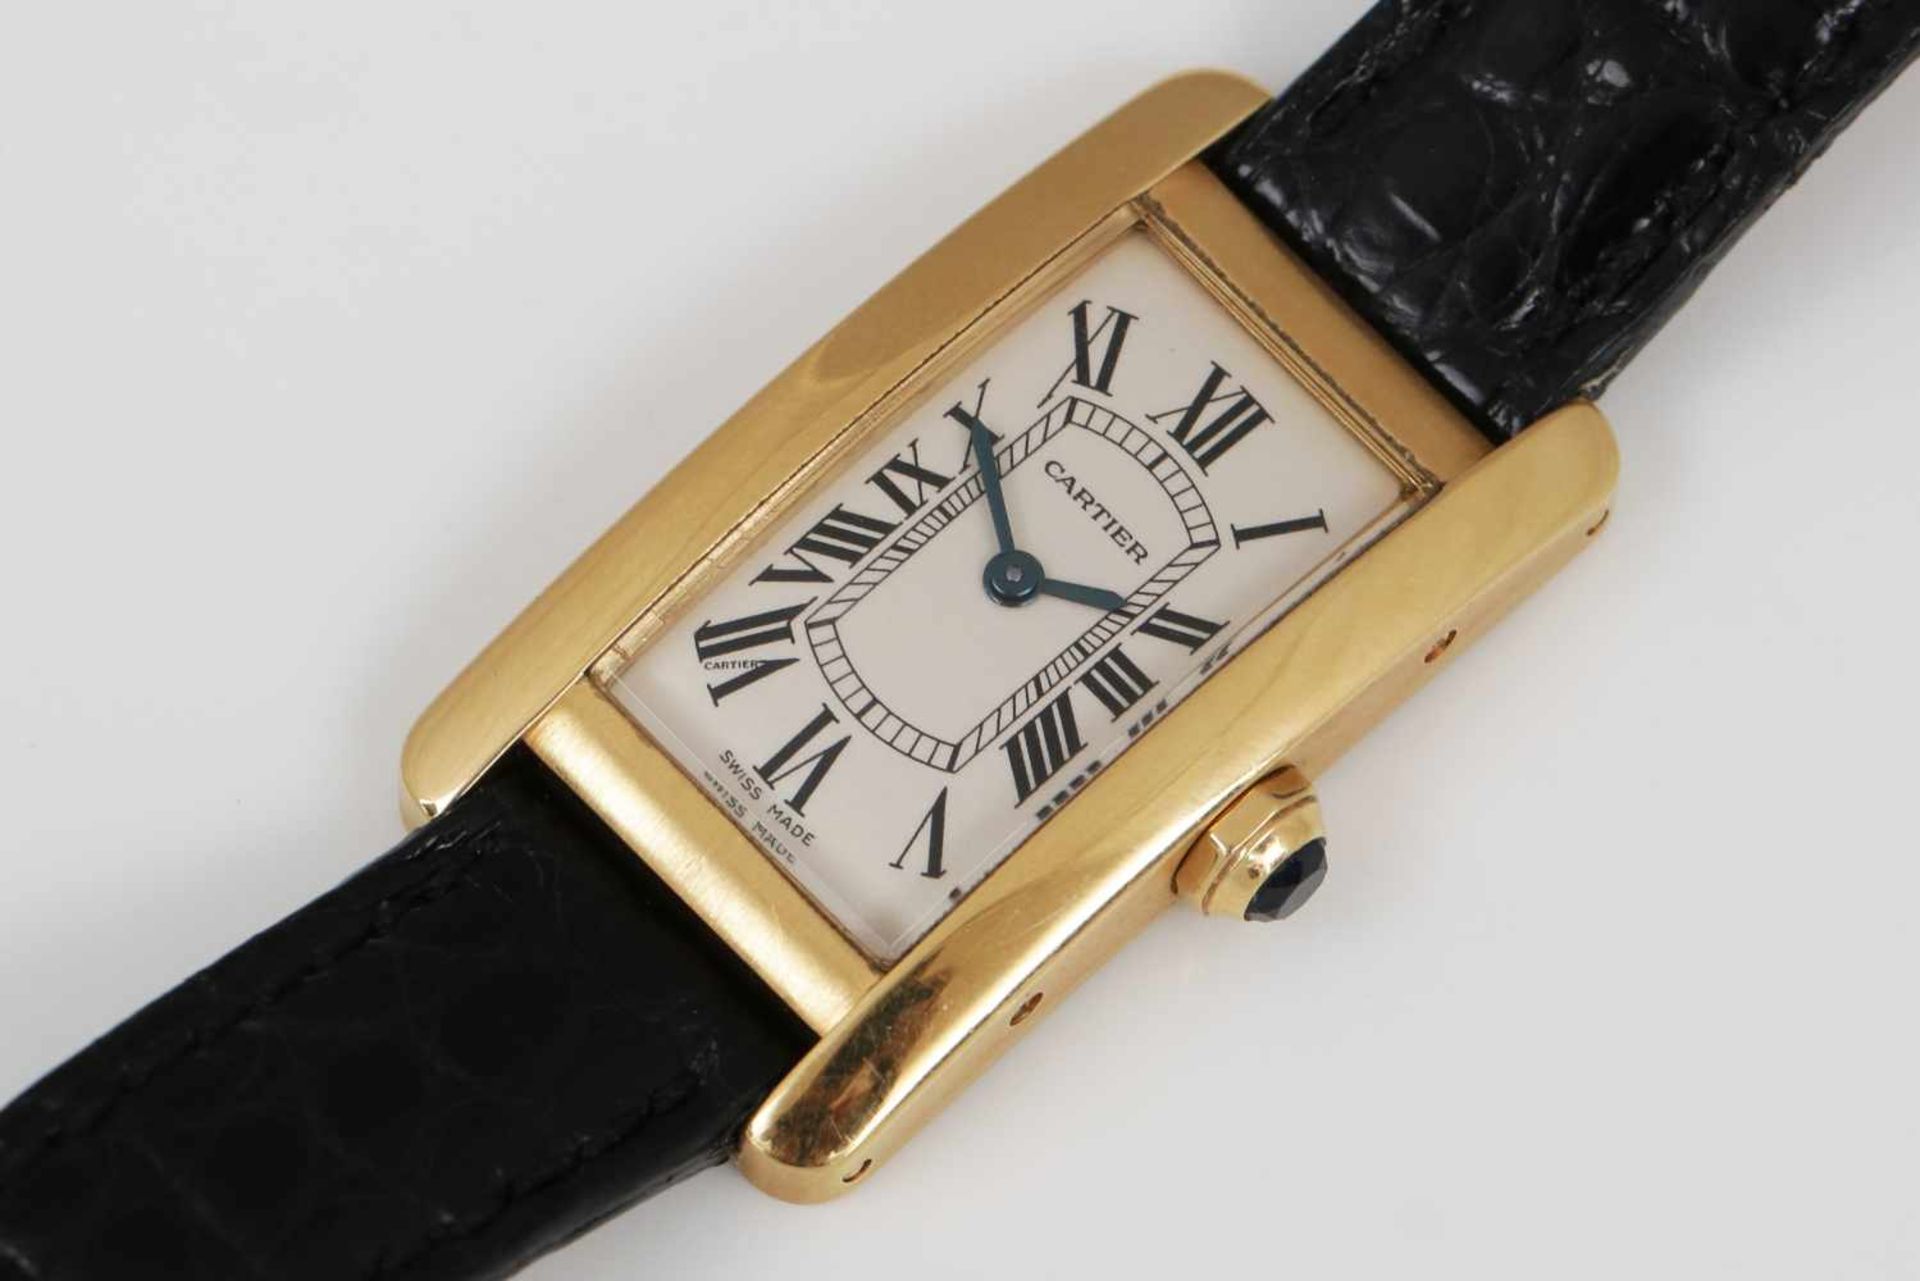 CARTIER ArmbanduhrTank Americaine, 750er Gelbgold, Saphir-Cabochon an der Krone, weißes